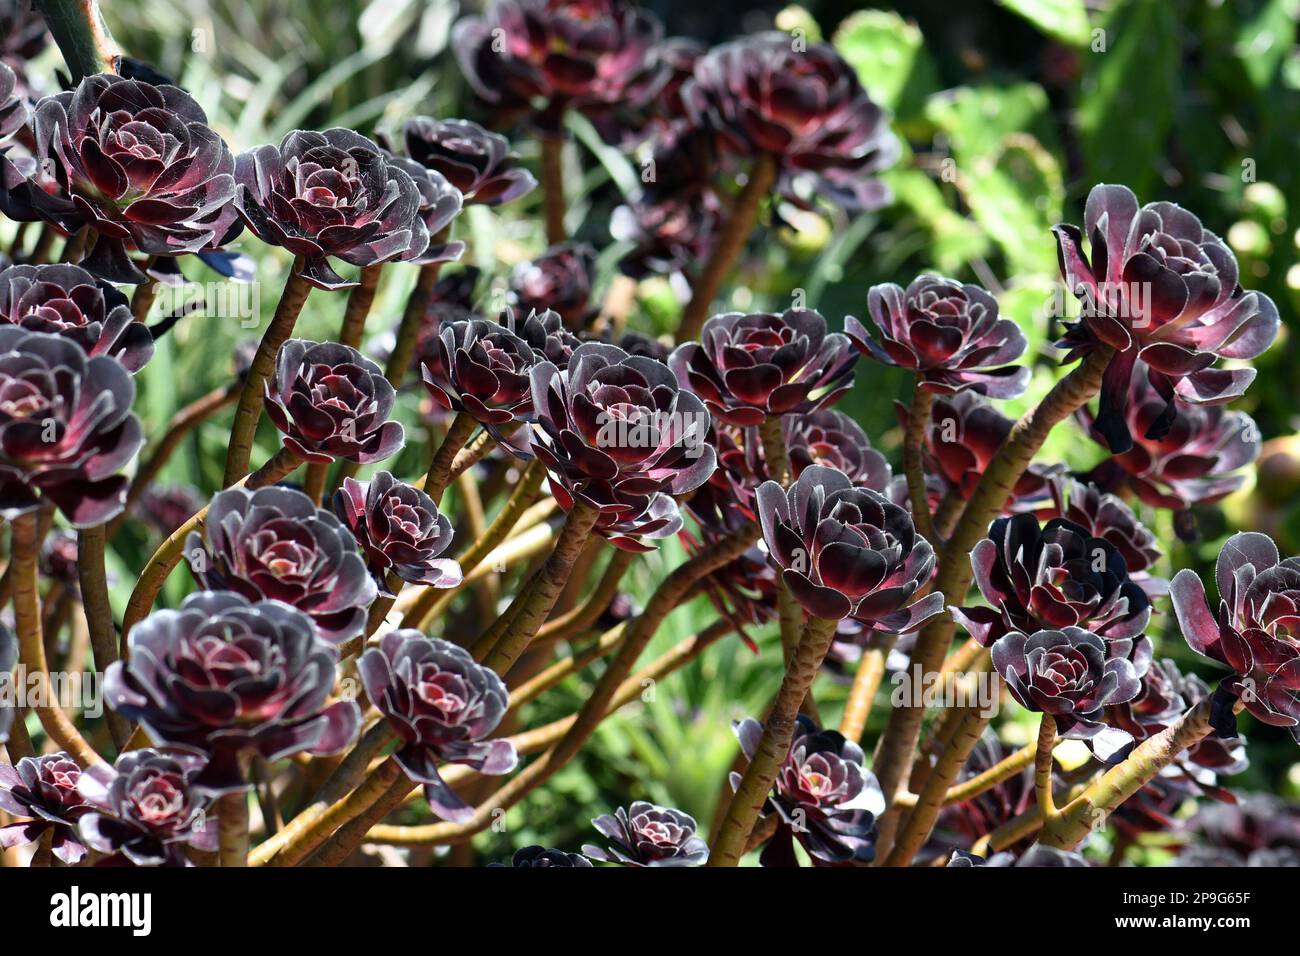 Follaje rojo púrpura oscuro borgoña y rosetas de la planta suculenta Aeonium arboretum atropurpureum, familia Crassulaceae. Foto de stock